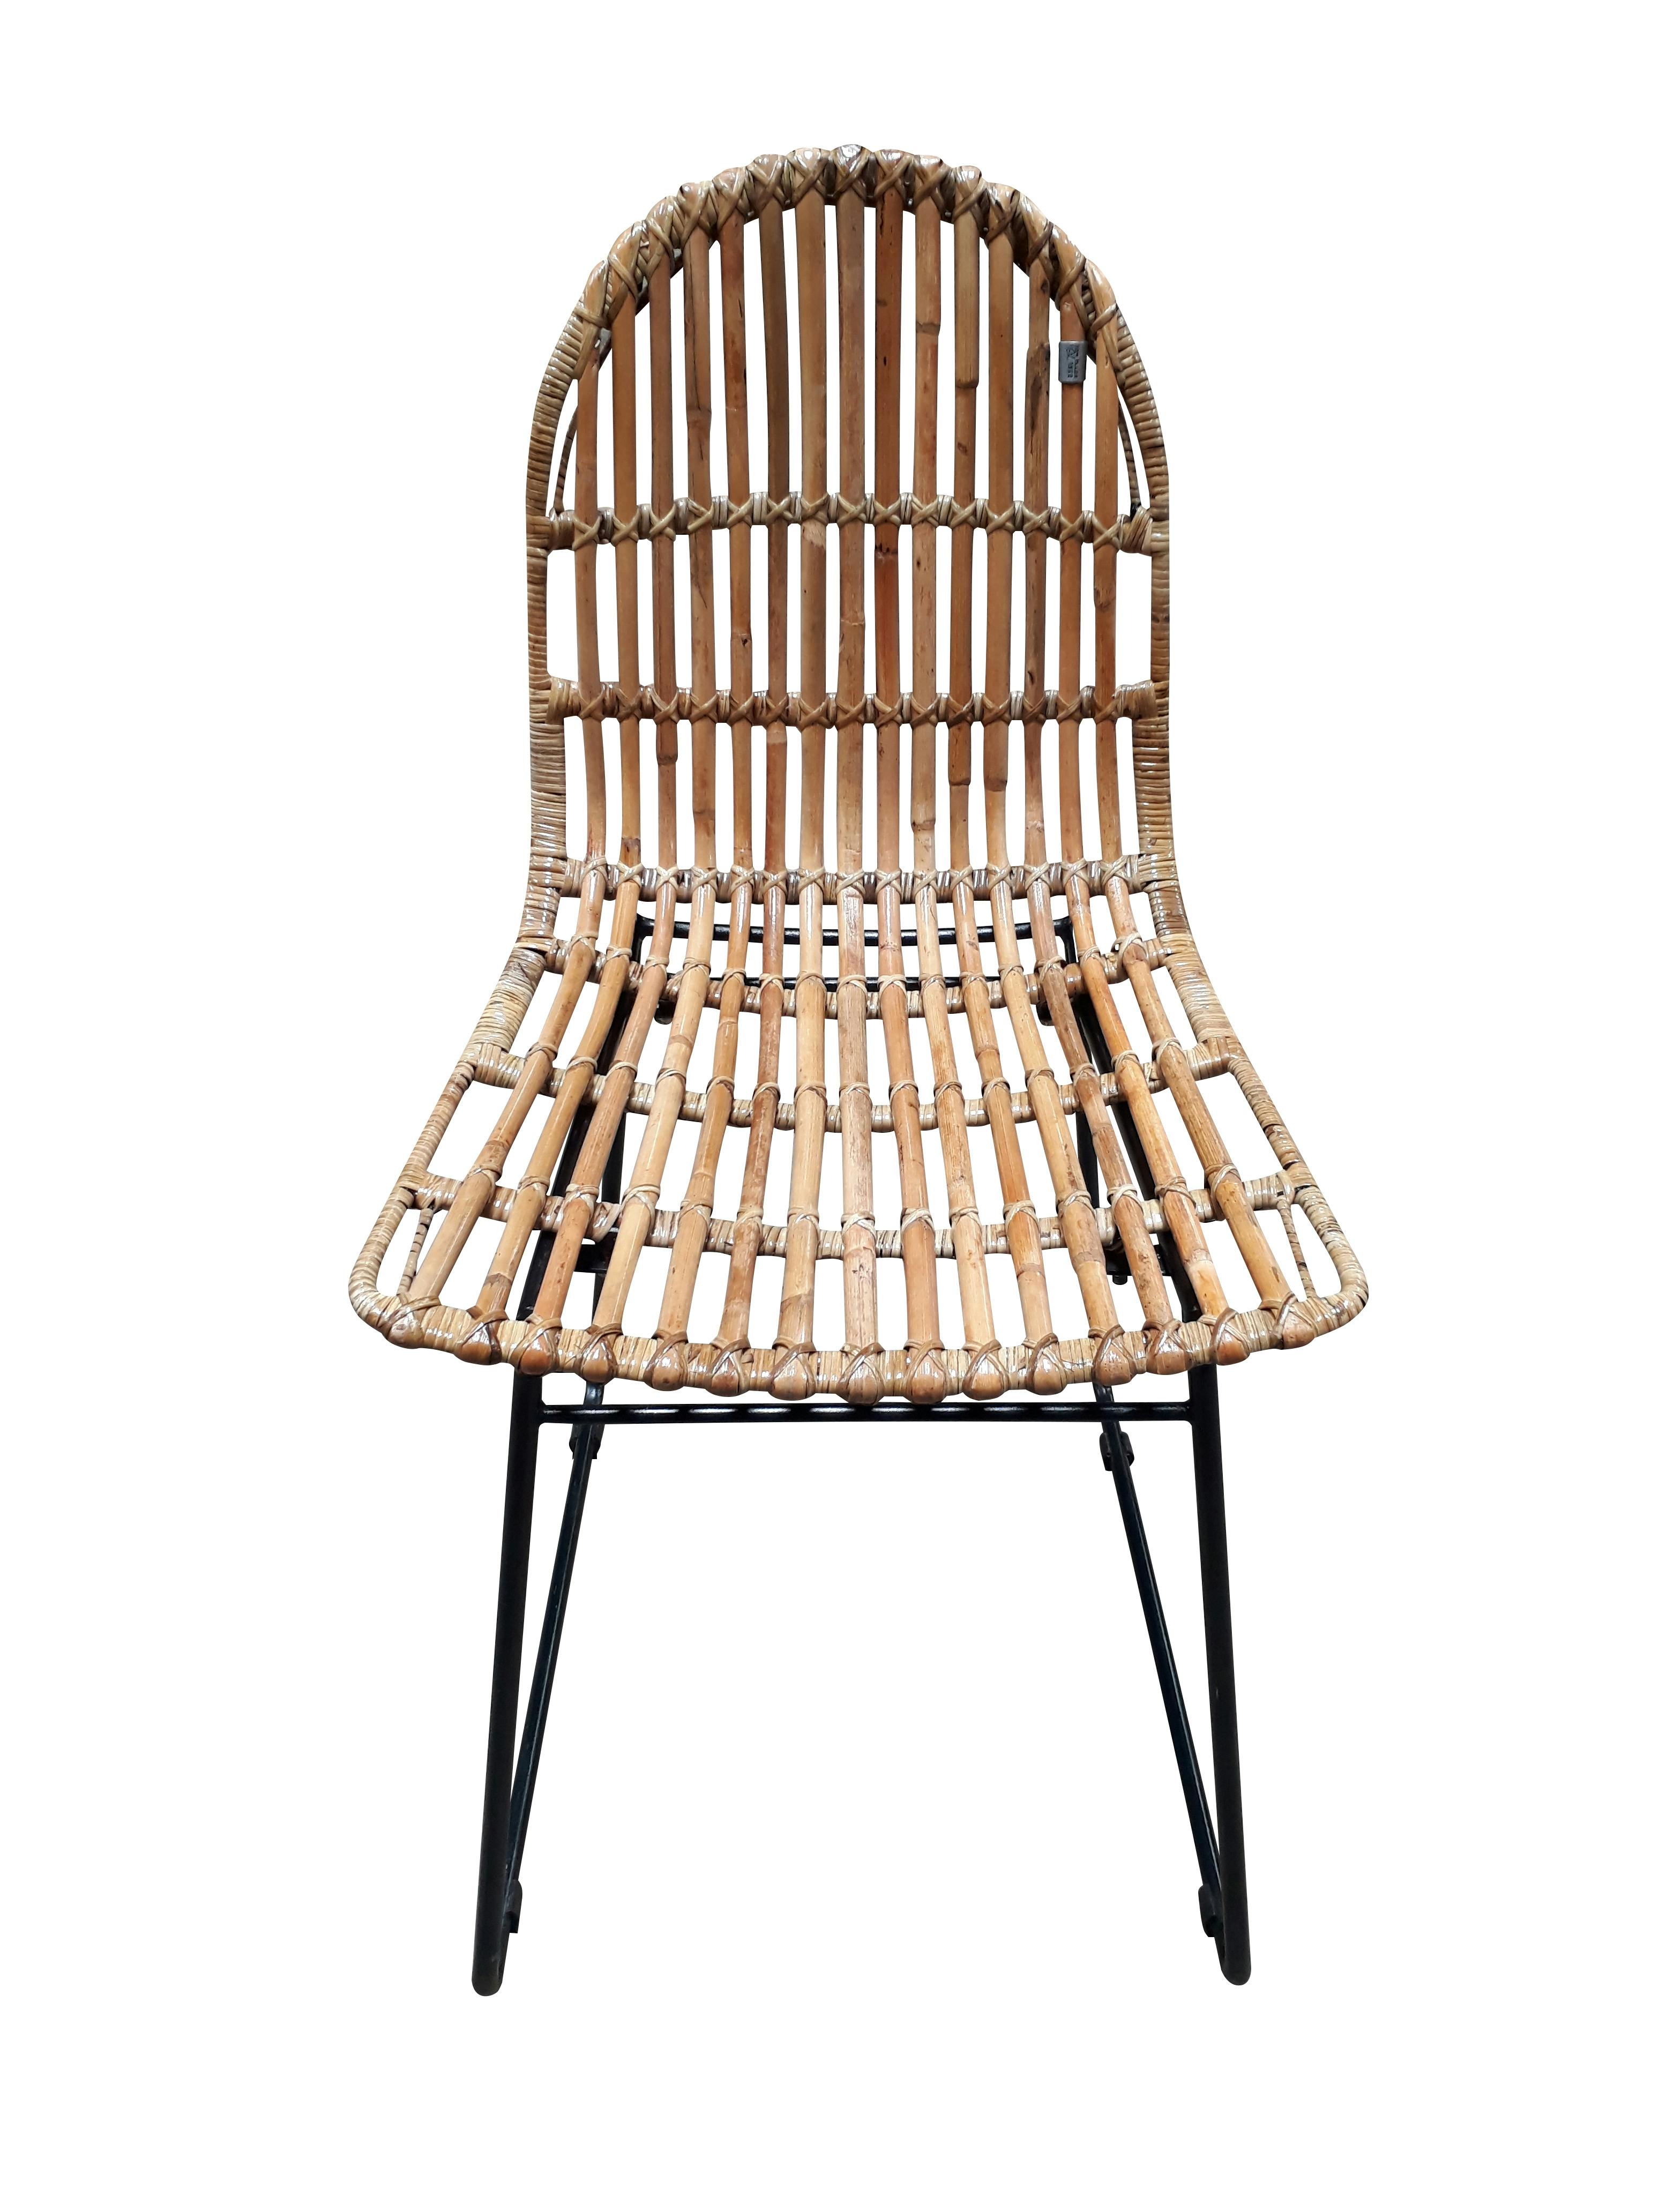 SIT Möbel Stuhl Tom Tailor cm Sitzschale | | 84,5 x Gestell Serie METRO x 50 RATTAN B | natur T 05338-01 Metall Marktplatz 60 Rattan H | | schwarz 2er-Set 